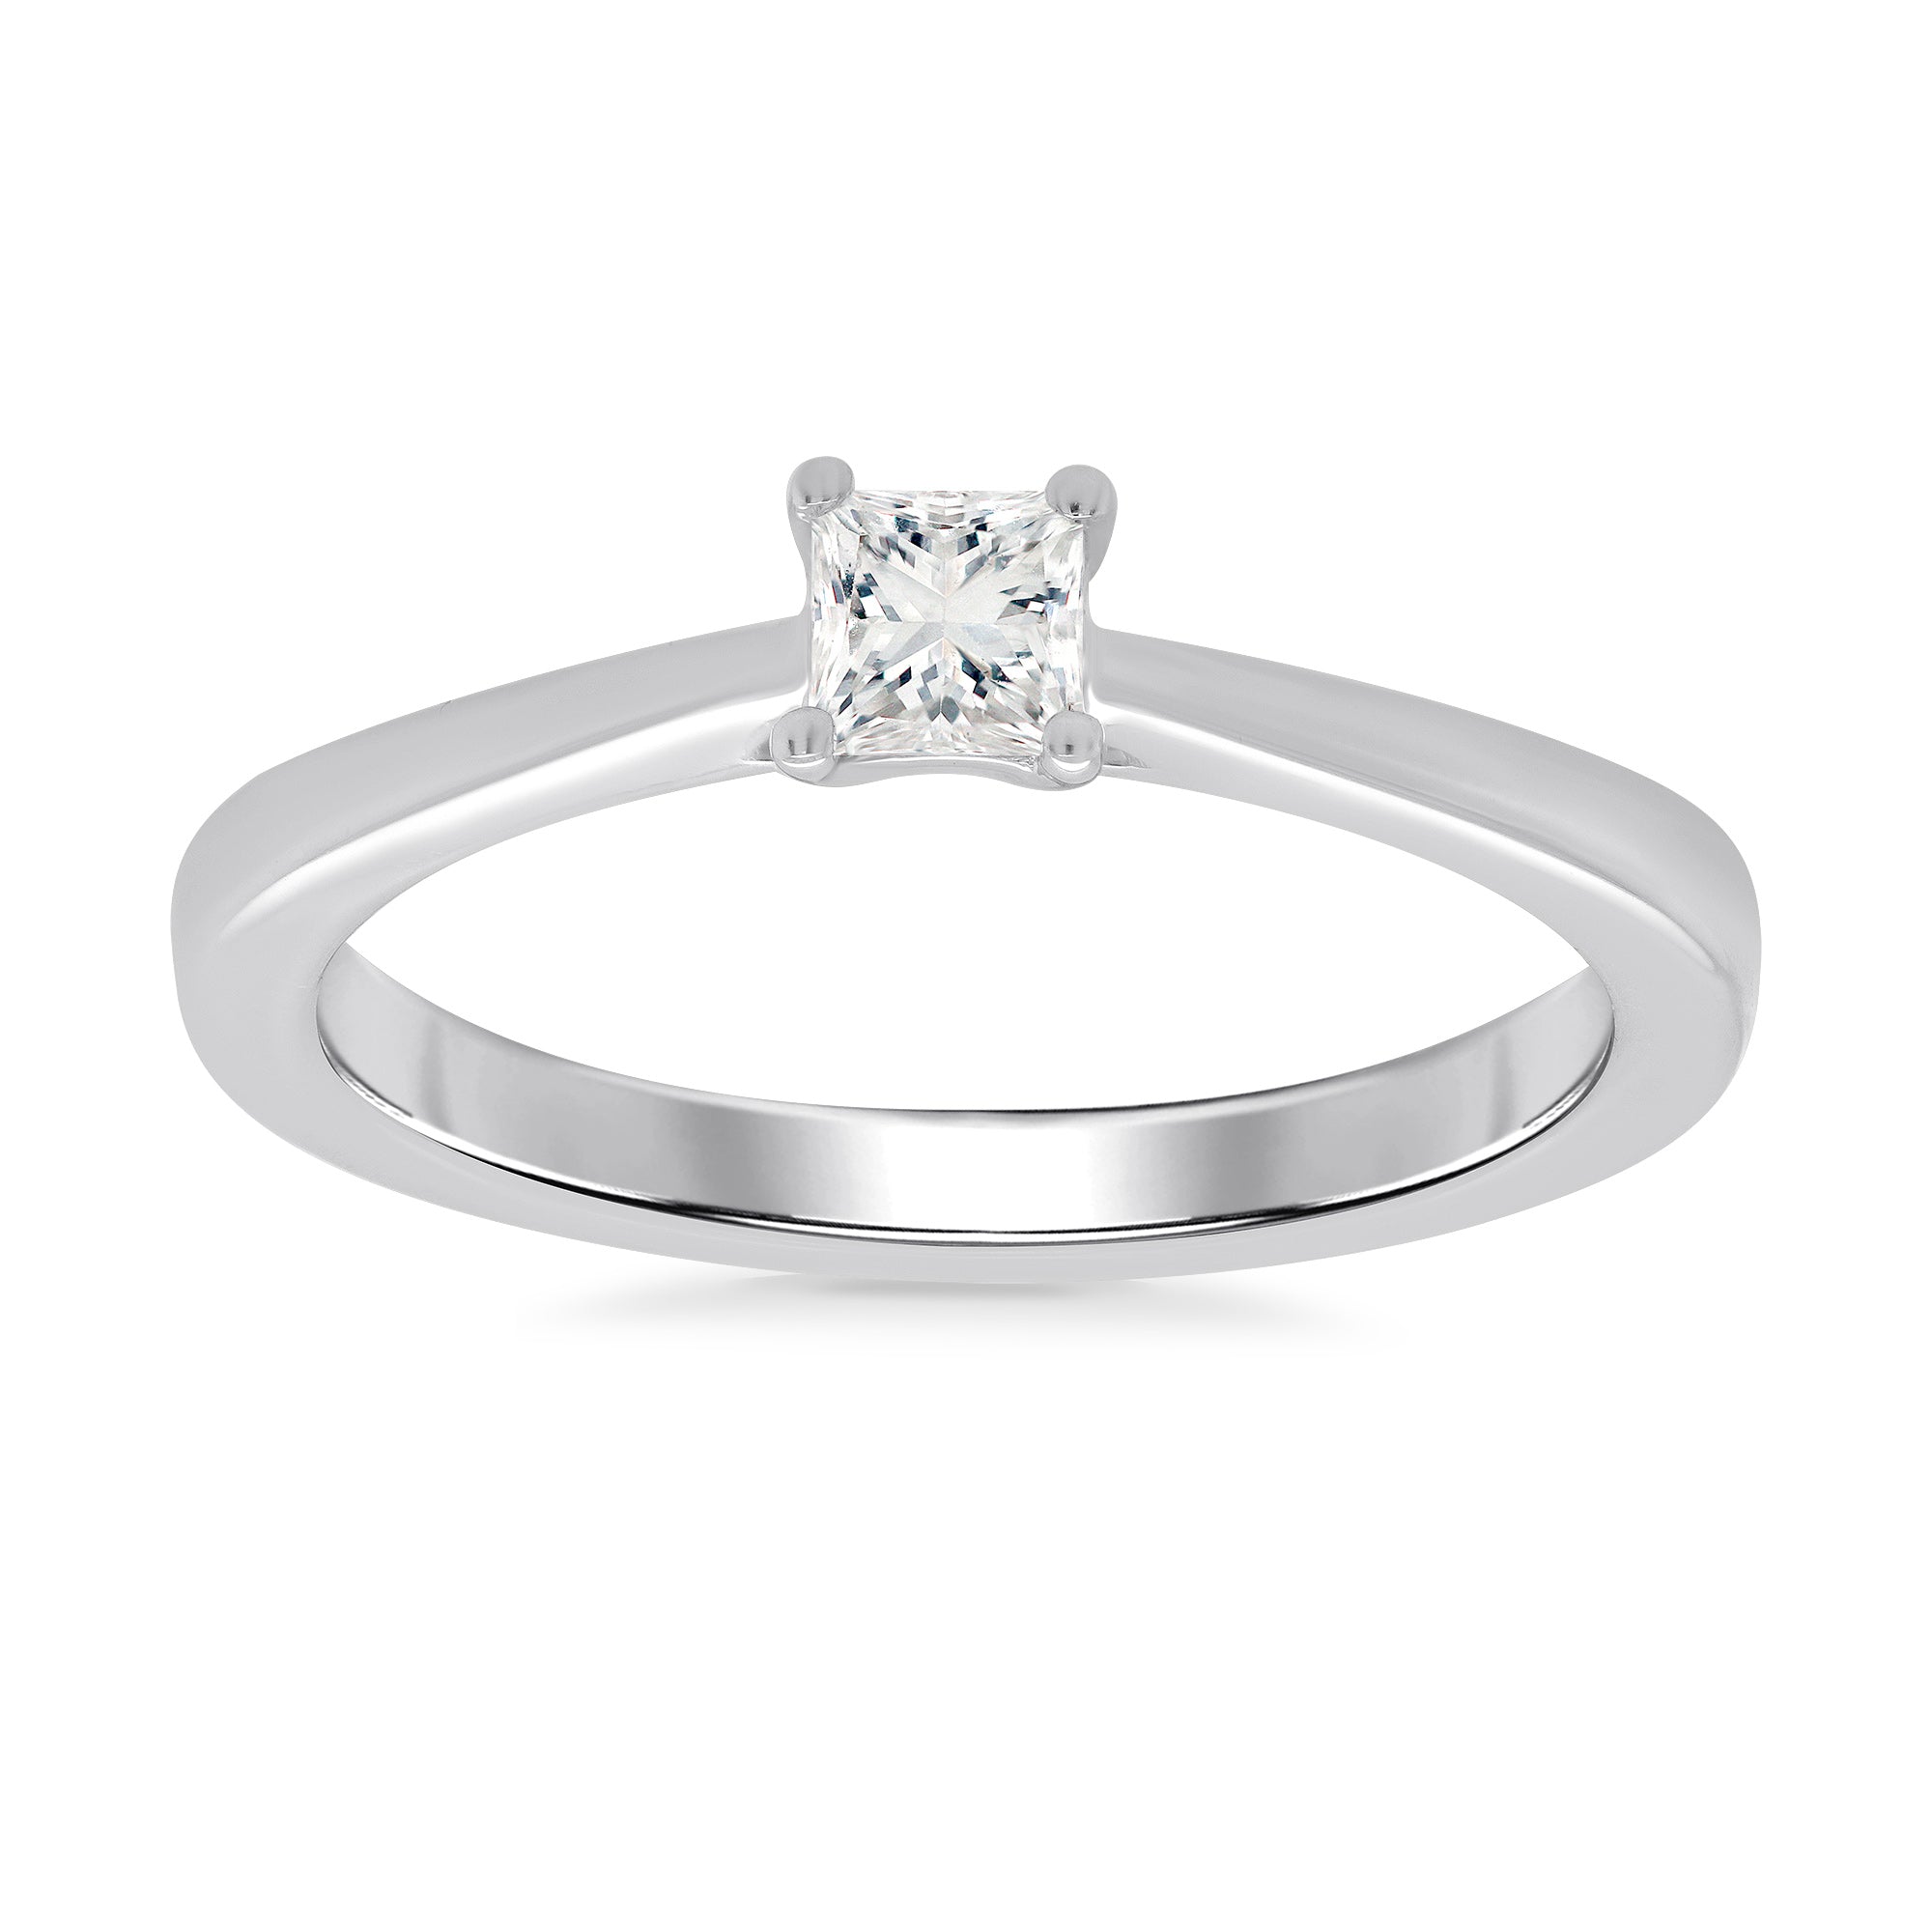 9ct white gold princess cut single stone diamond ring 0.25ct